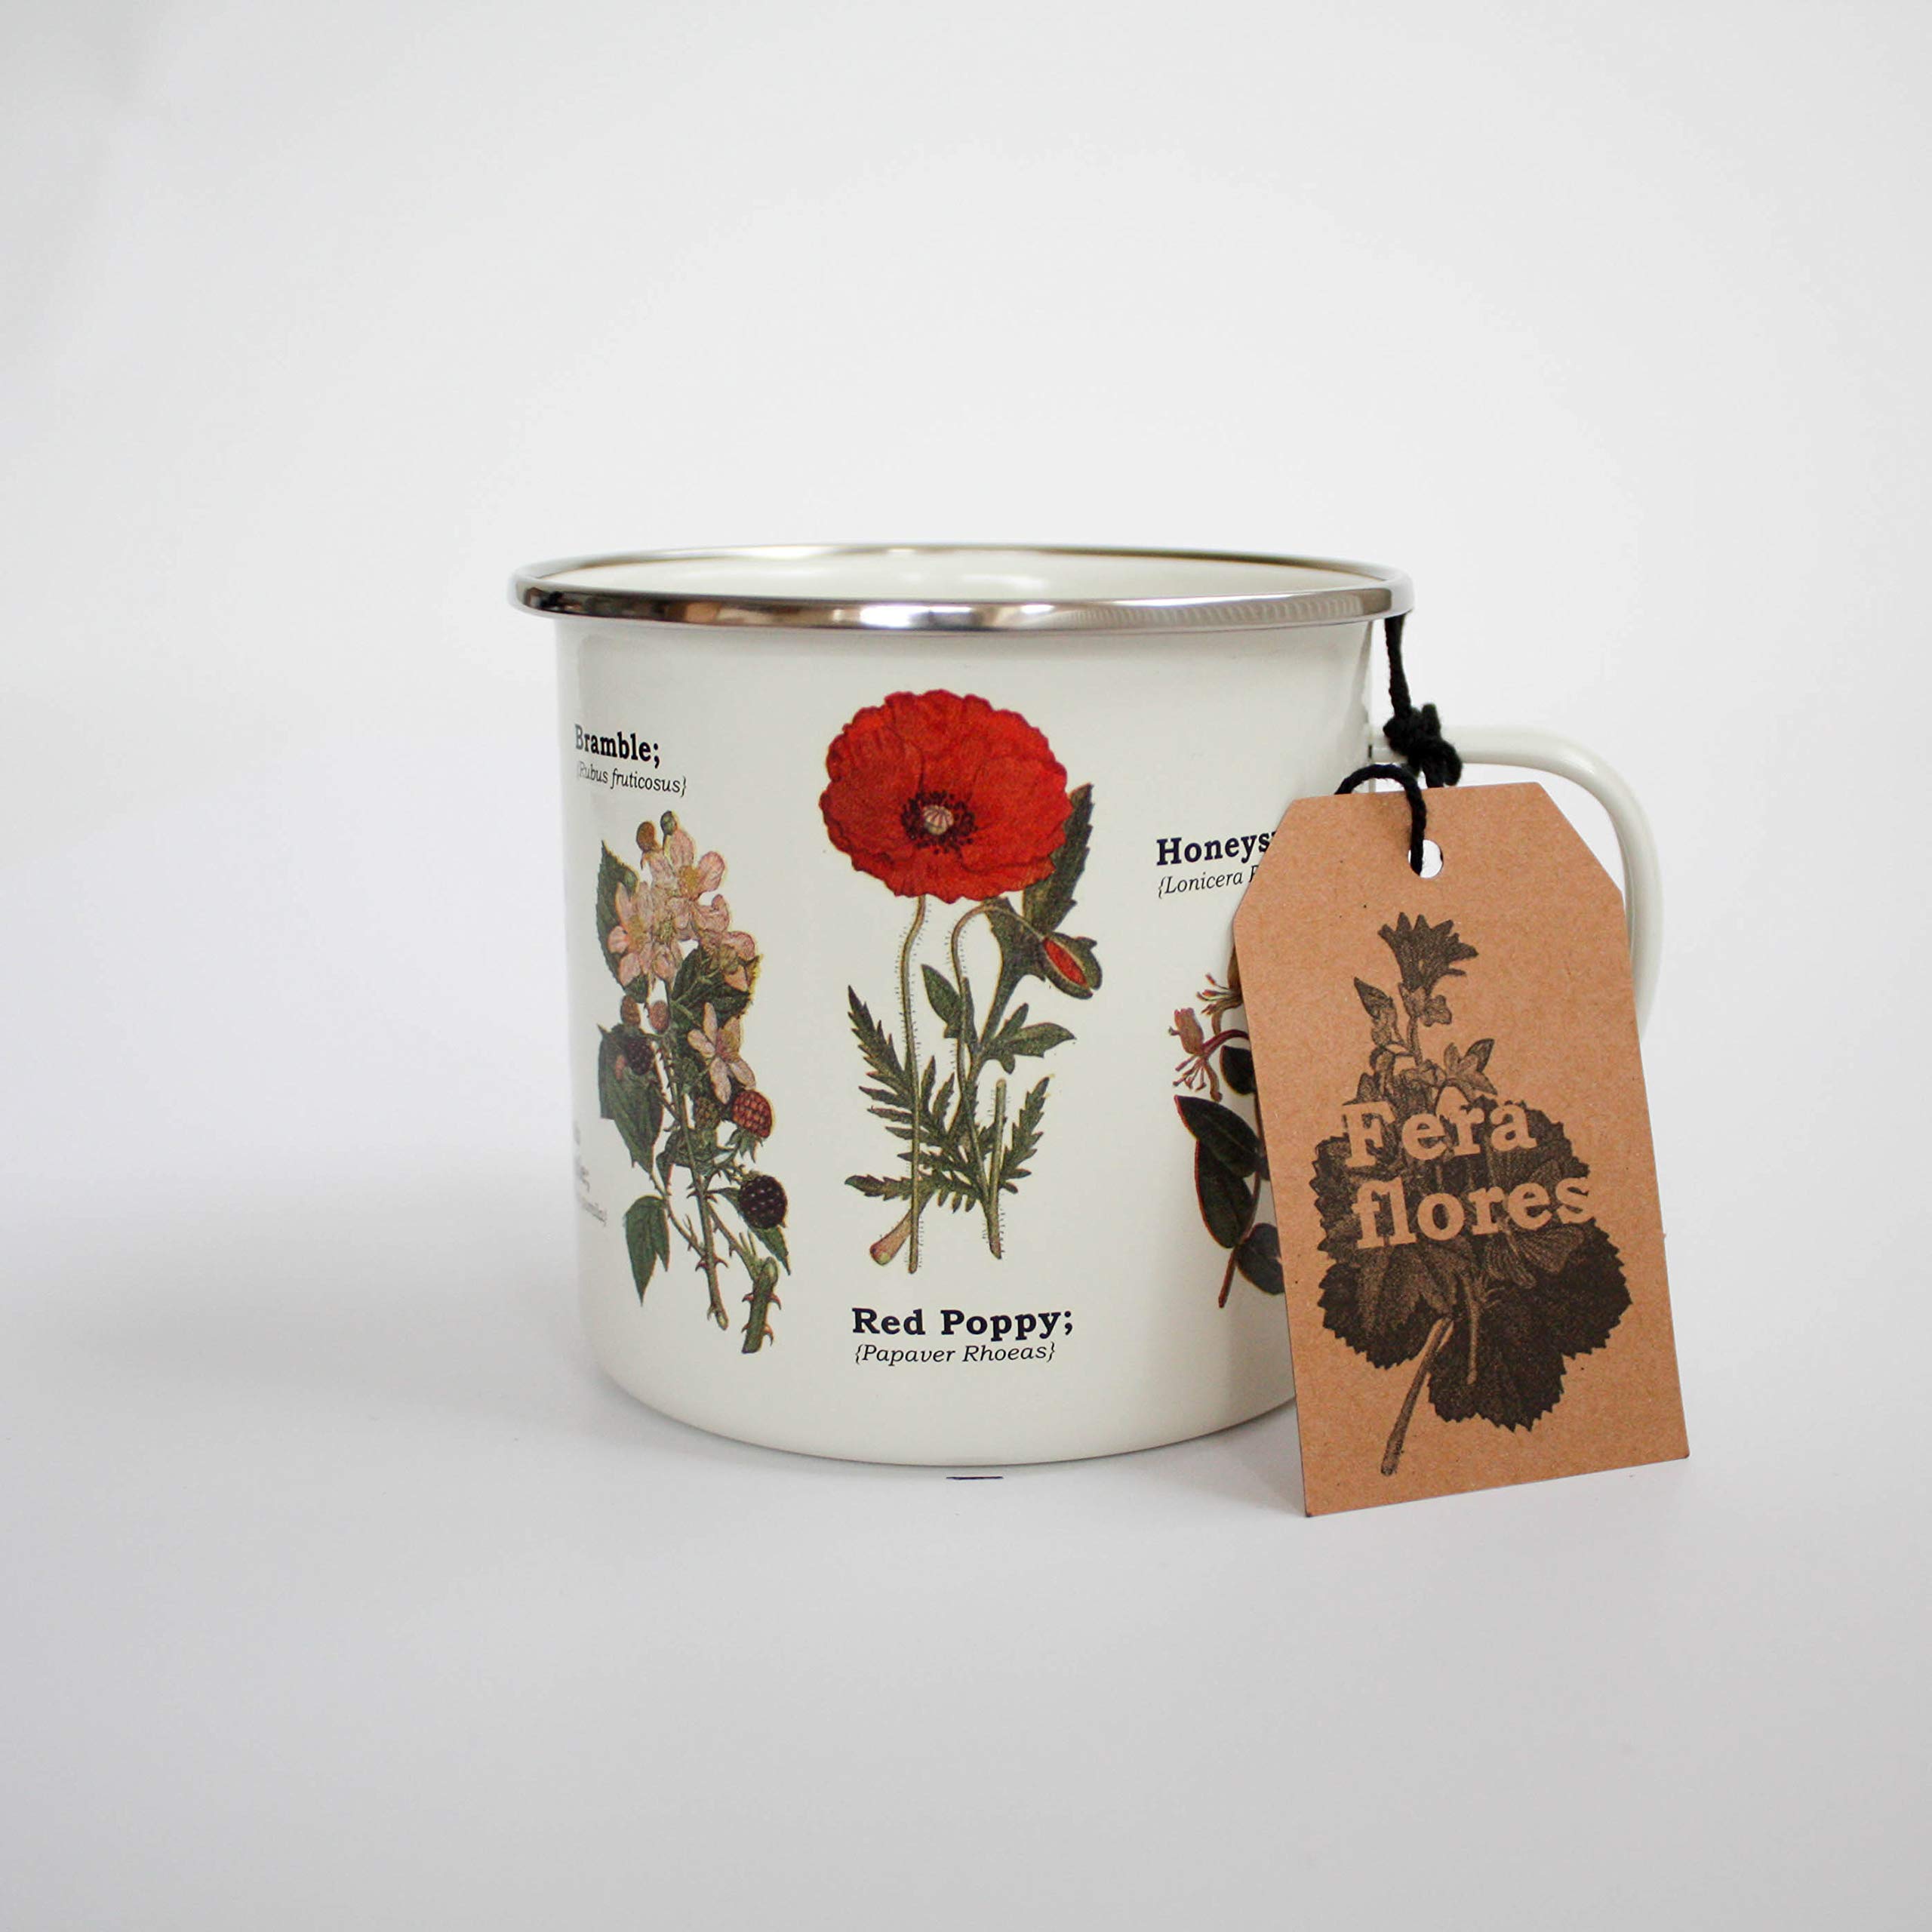 Gift Republic Wild Flower Enamel Mug, 1 Count (Pack of 1), Multicolor, 325 milliliters